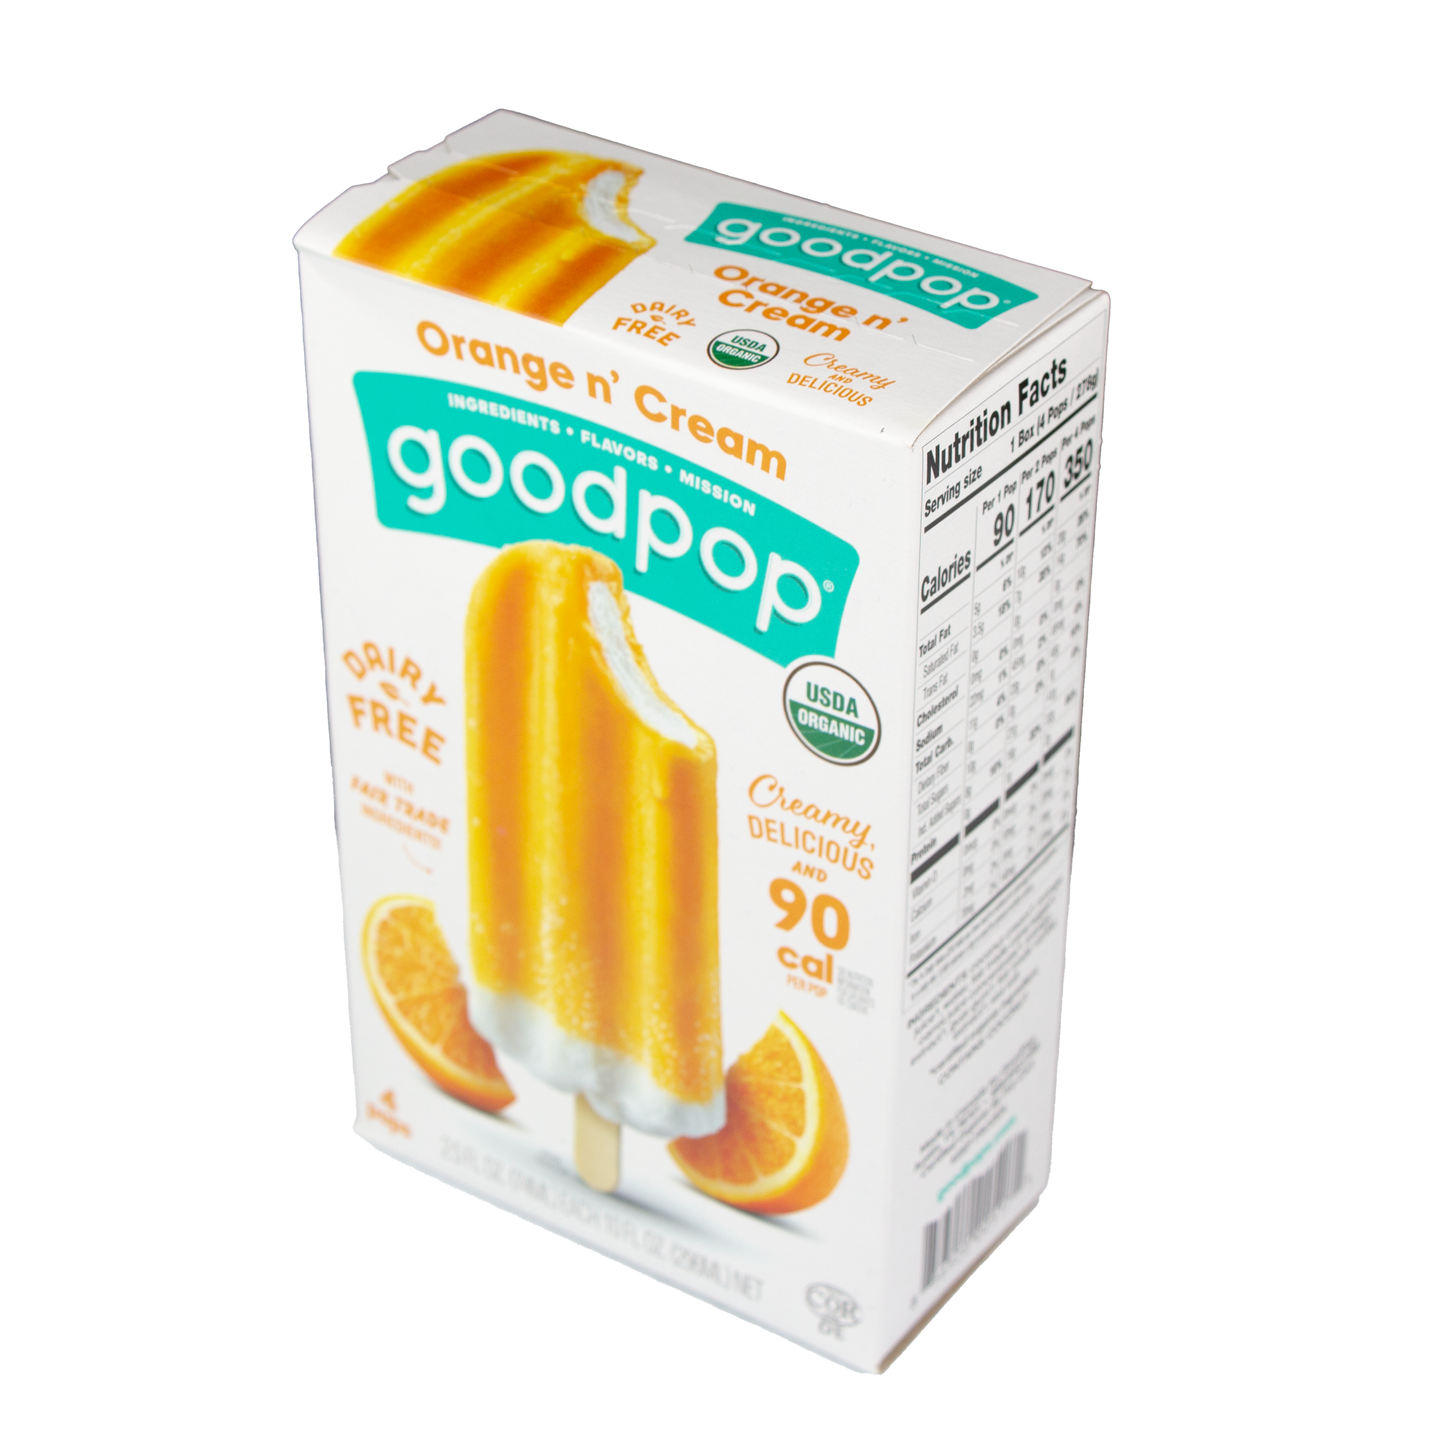 Goodpop - Orange n' Cream